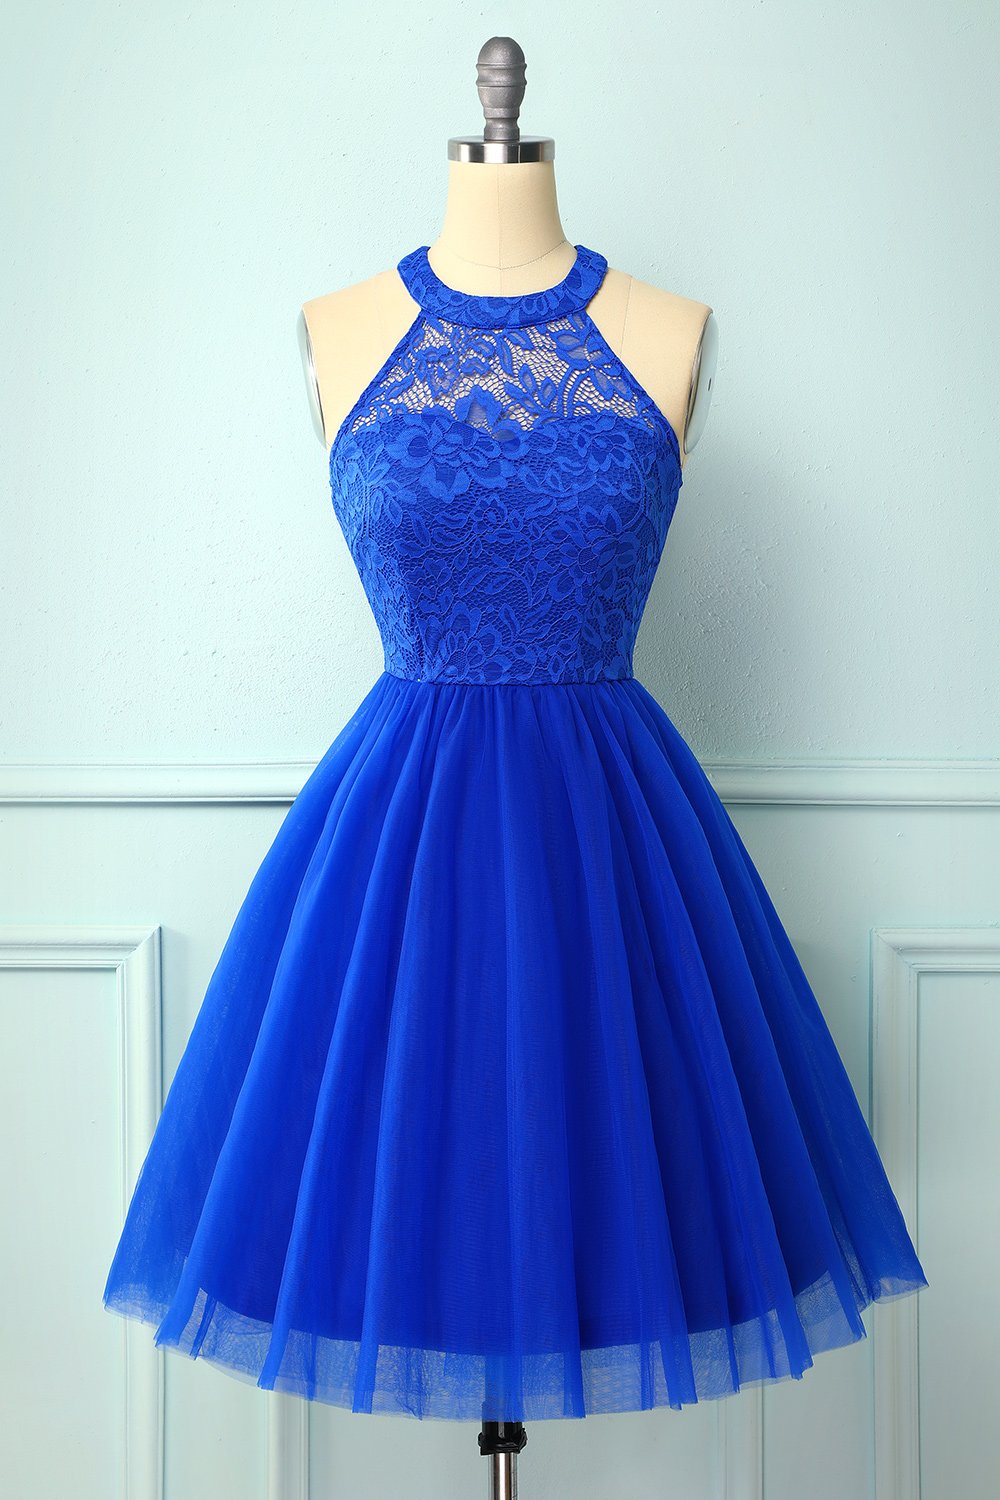 Homecomming Dress Black, Halter Royal Blue Lace Dress